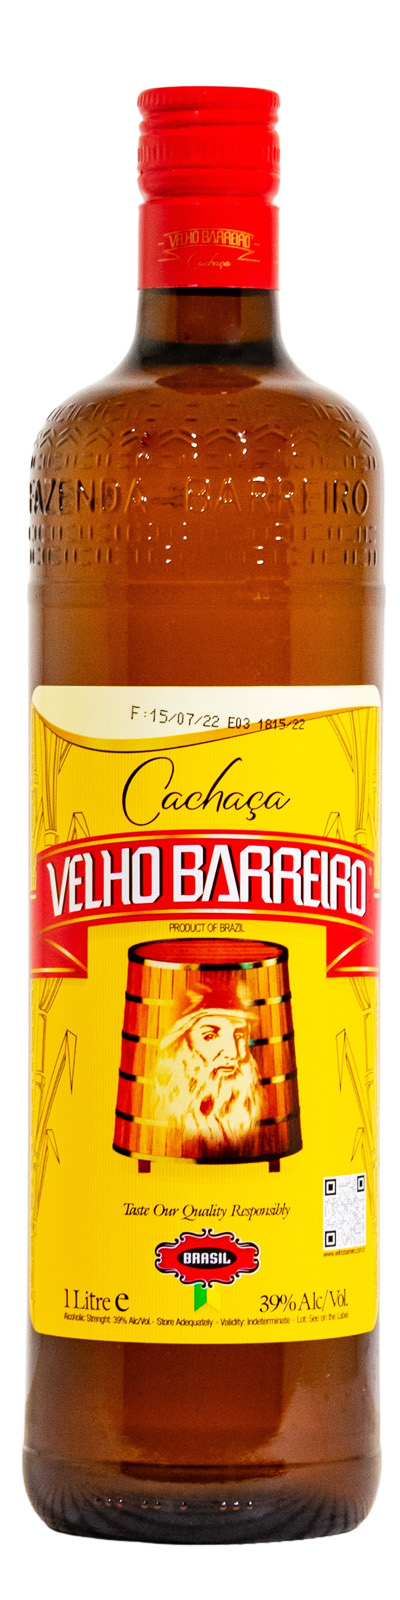 Silver Velho Cachaca günstig kaufen (1L) Barreiro